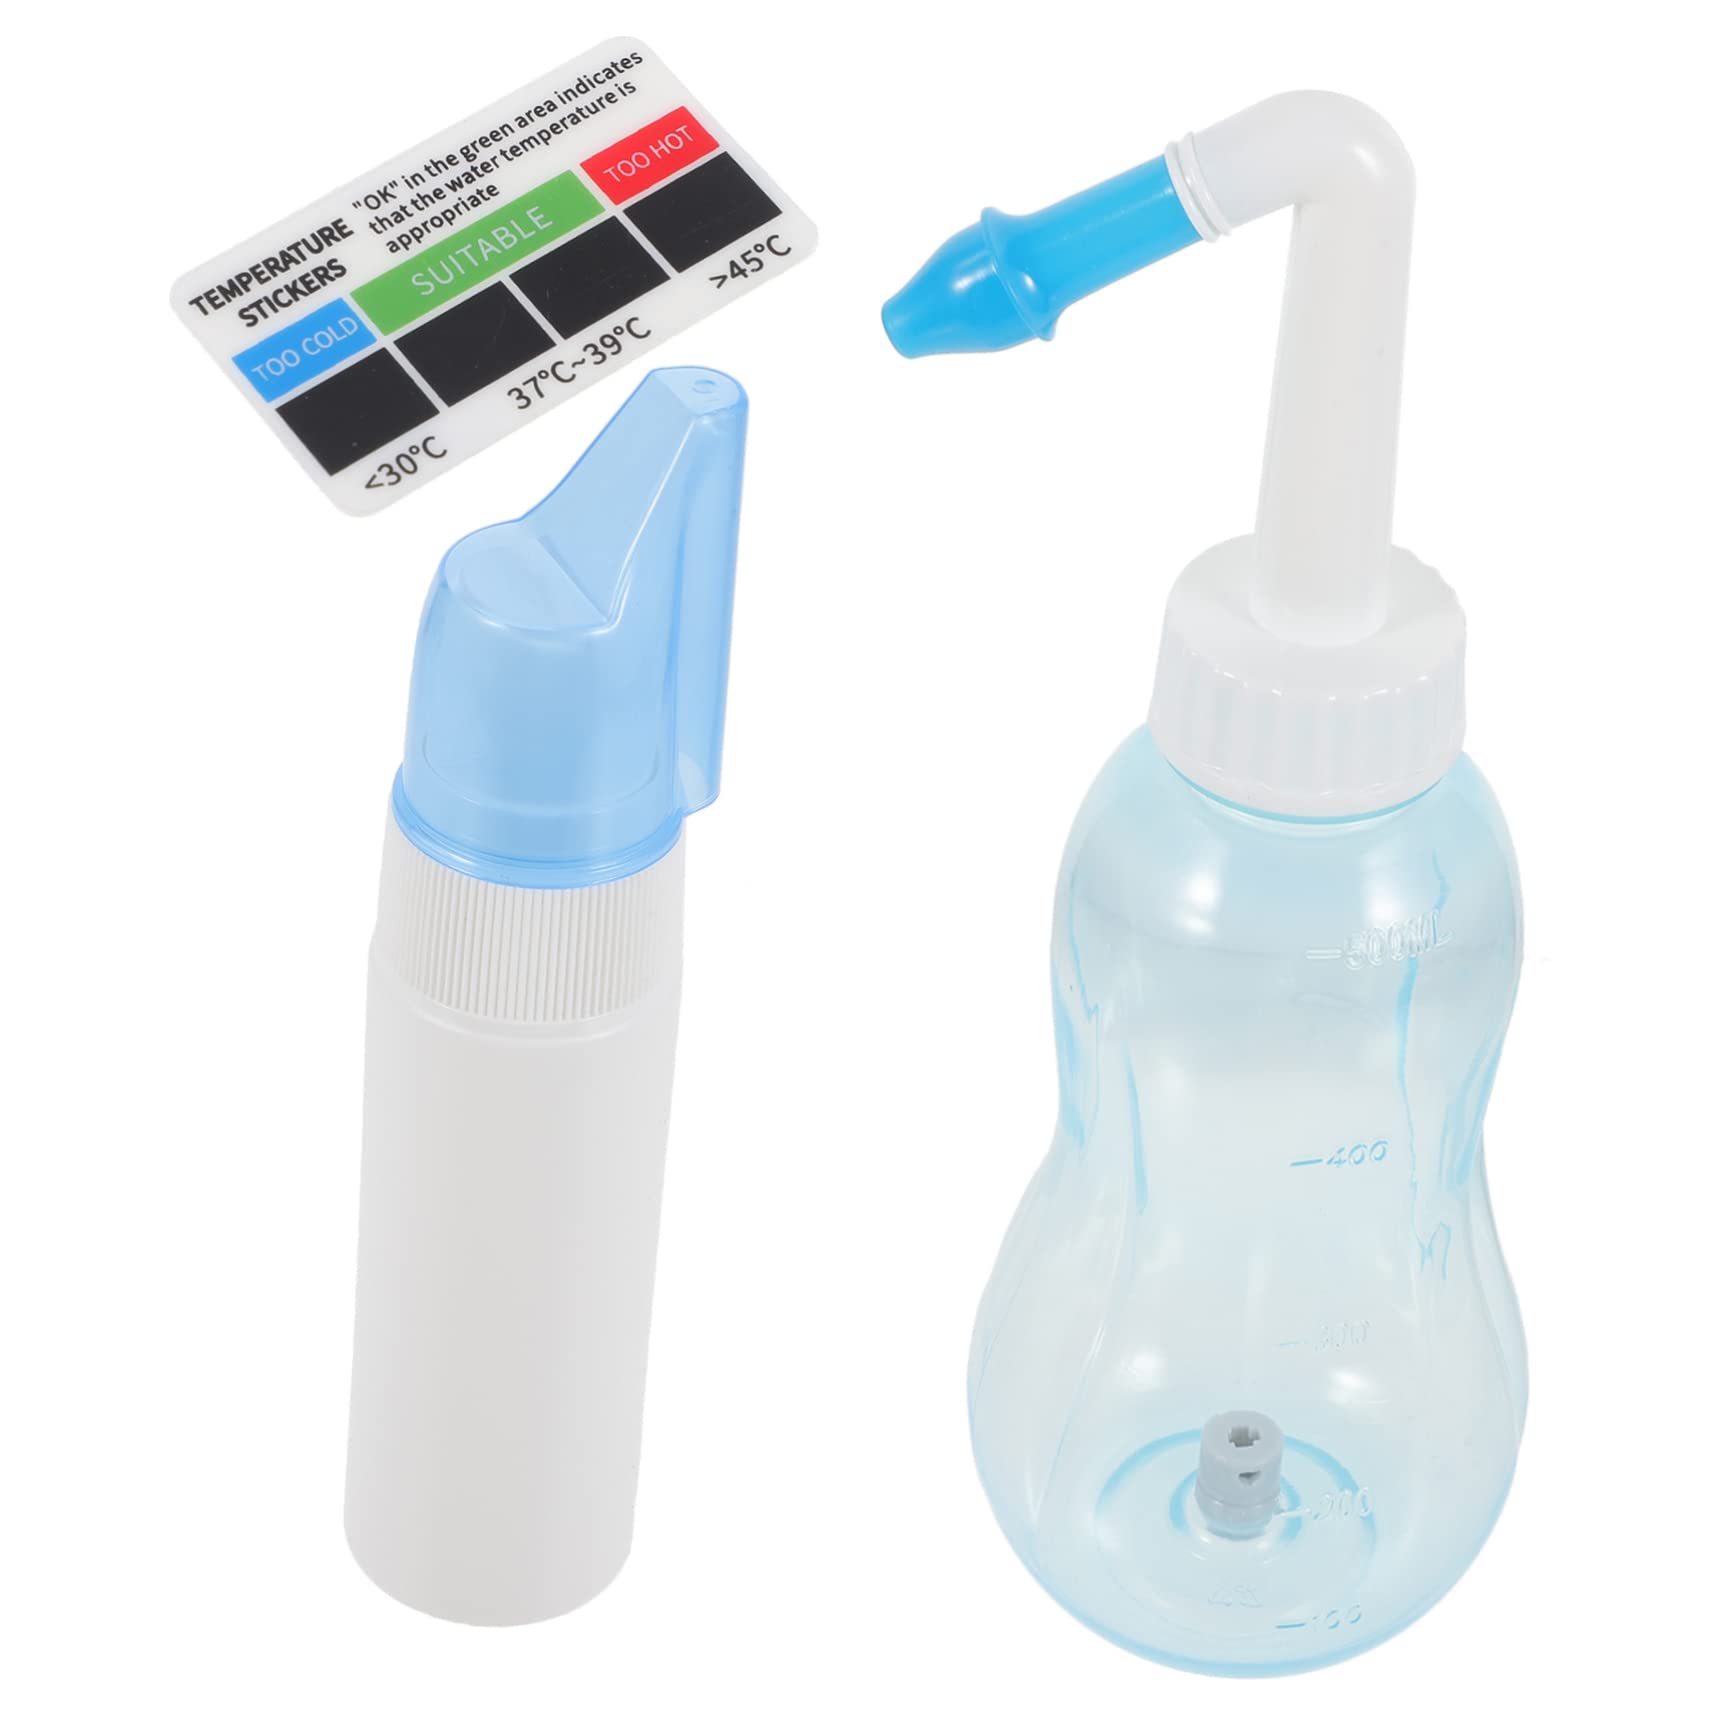  ANCS Nati Lota Plastic Nose Wash System Nose Cleaner